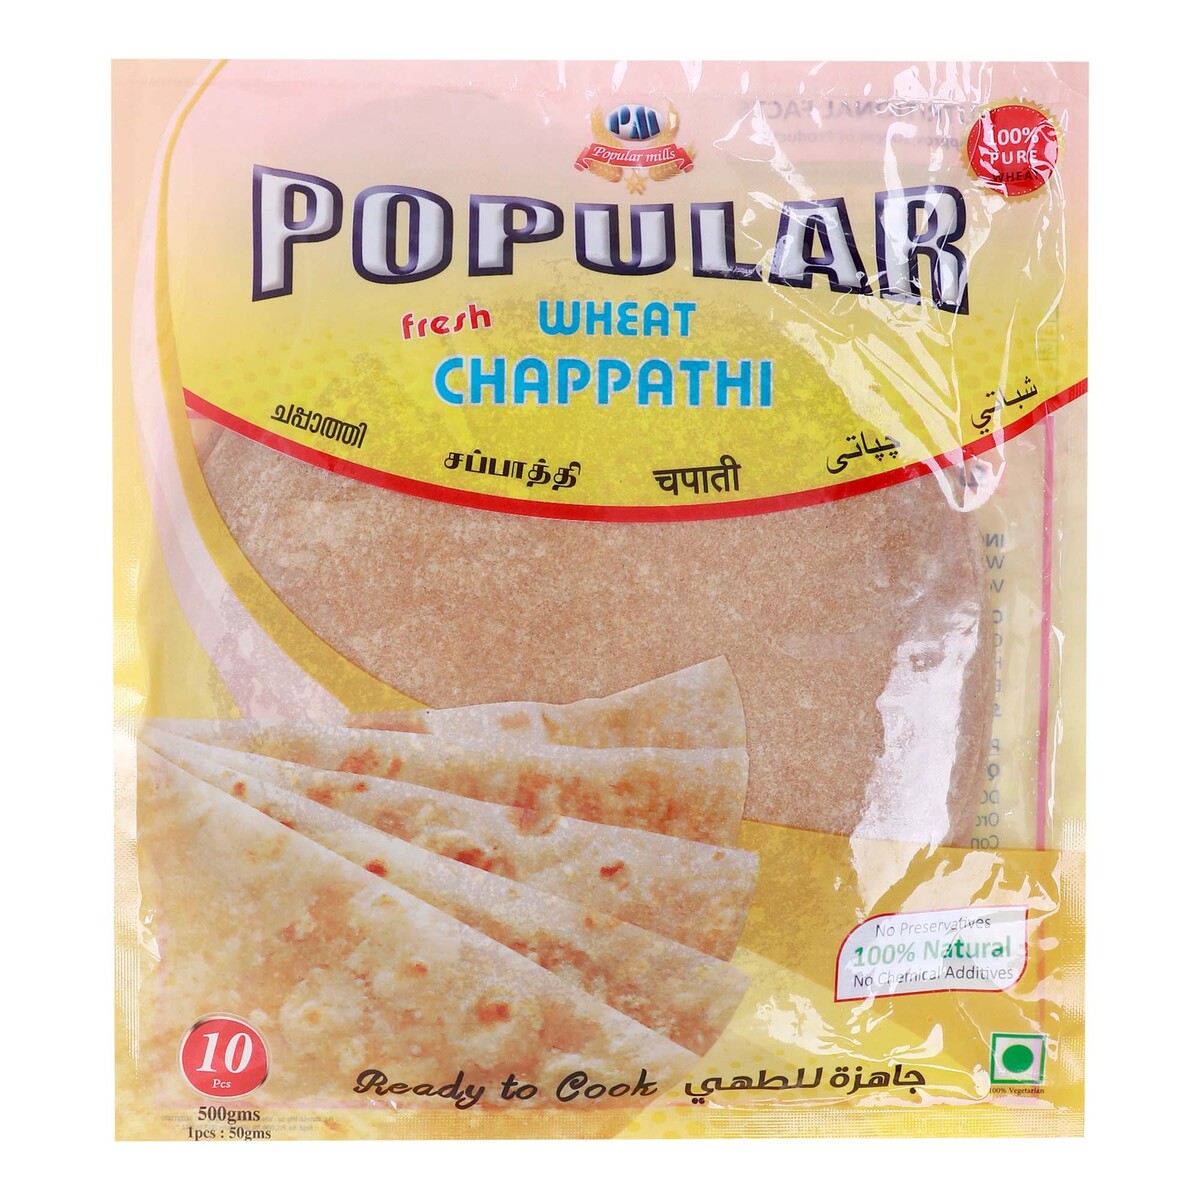 Popular Fresh Wheat Chappathi 500 g